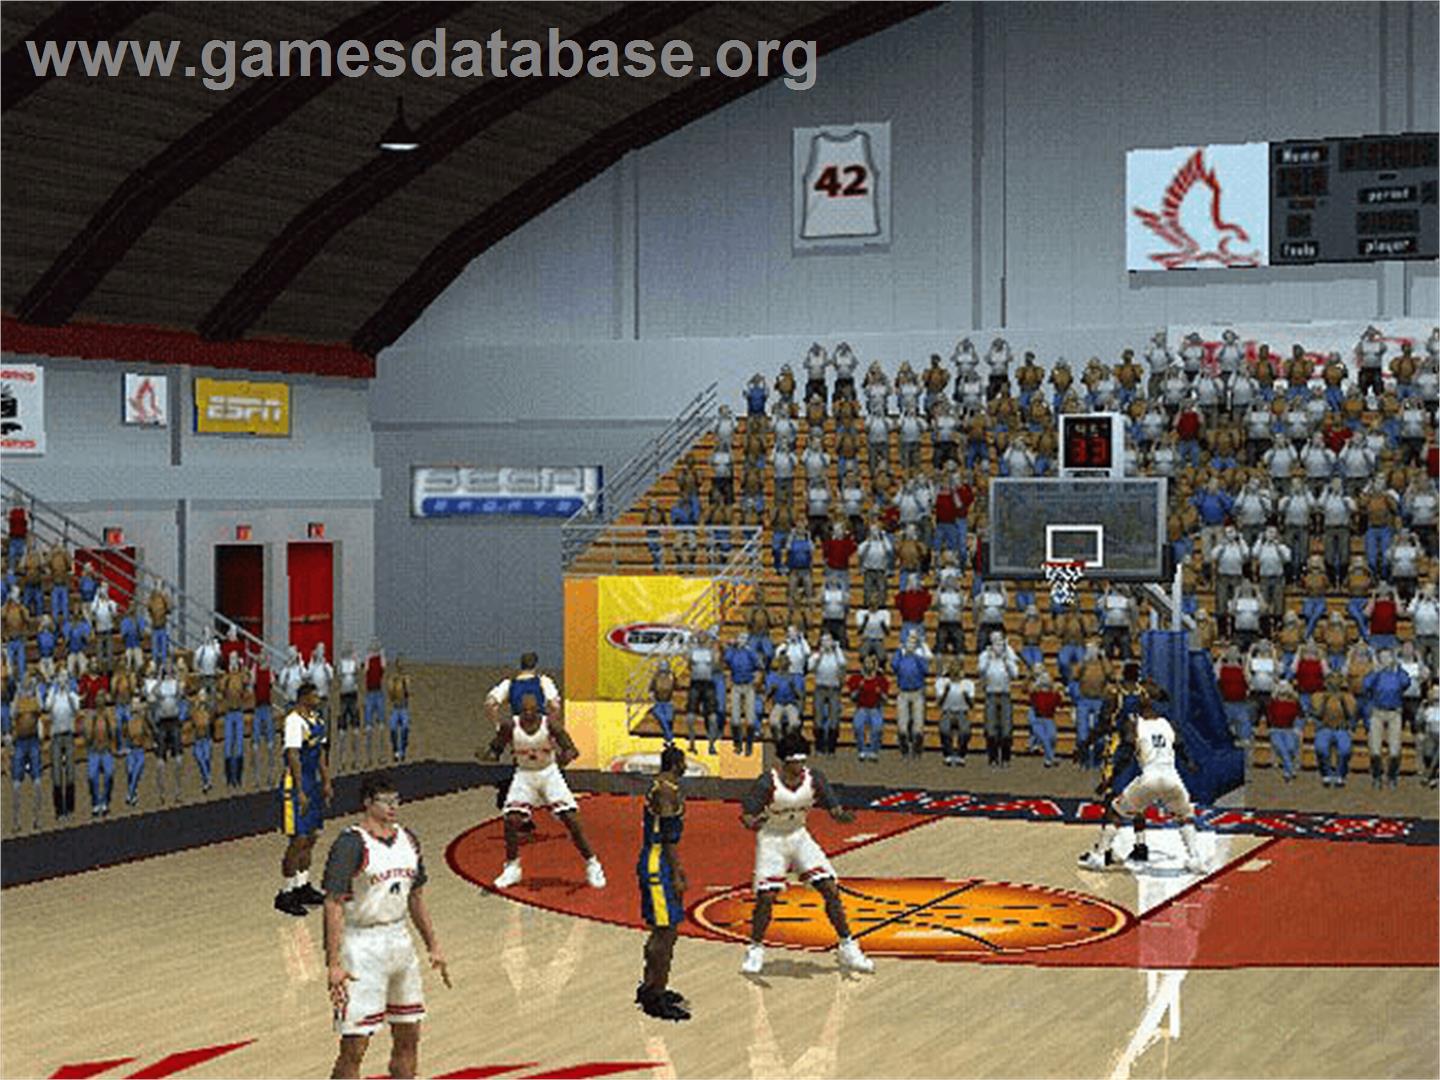 NCAA College Basketball 2K3 - Microsoft Xbox - Artwork - In Game